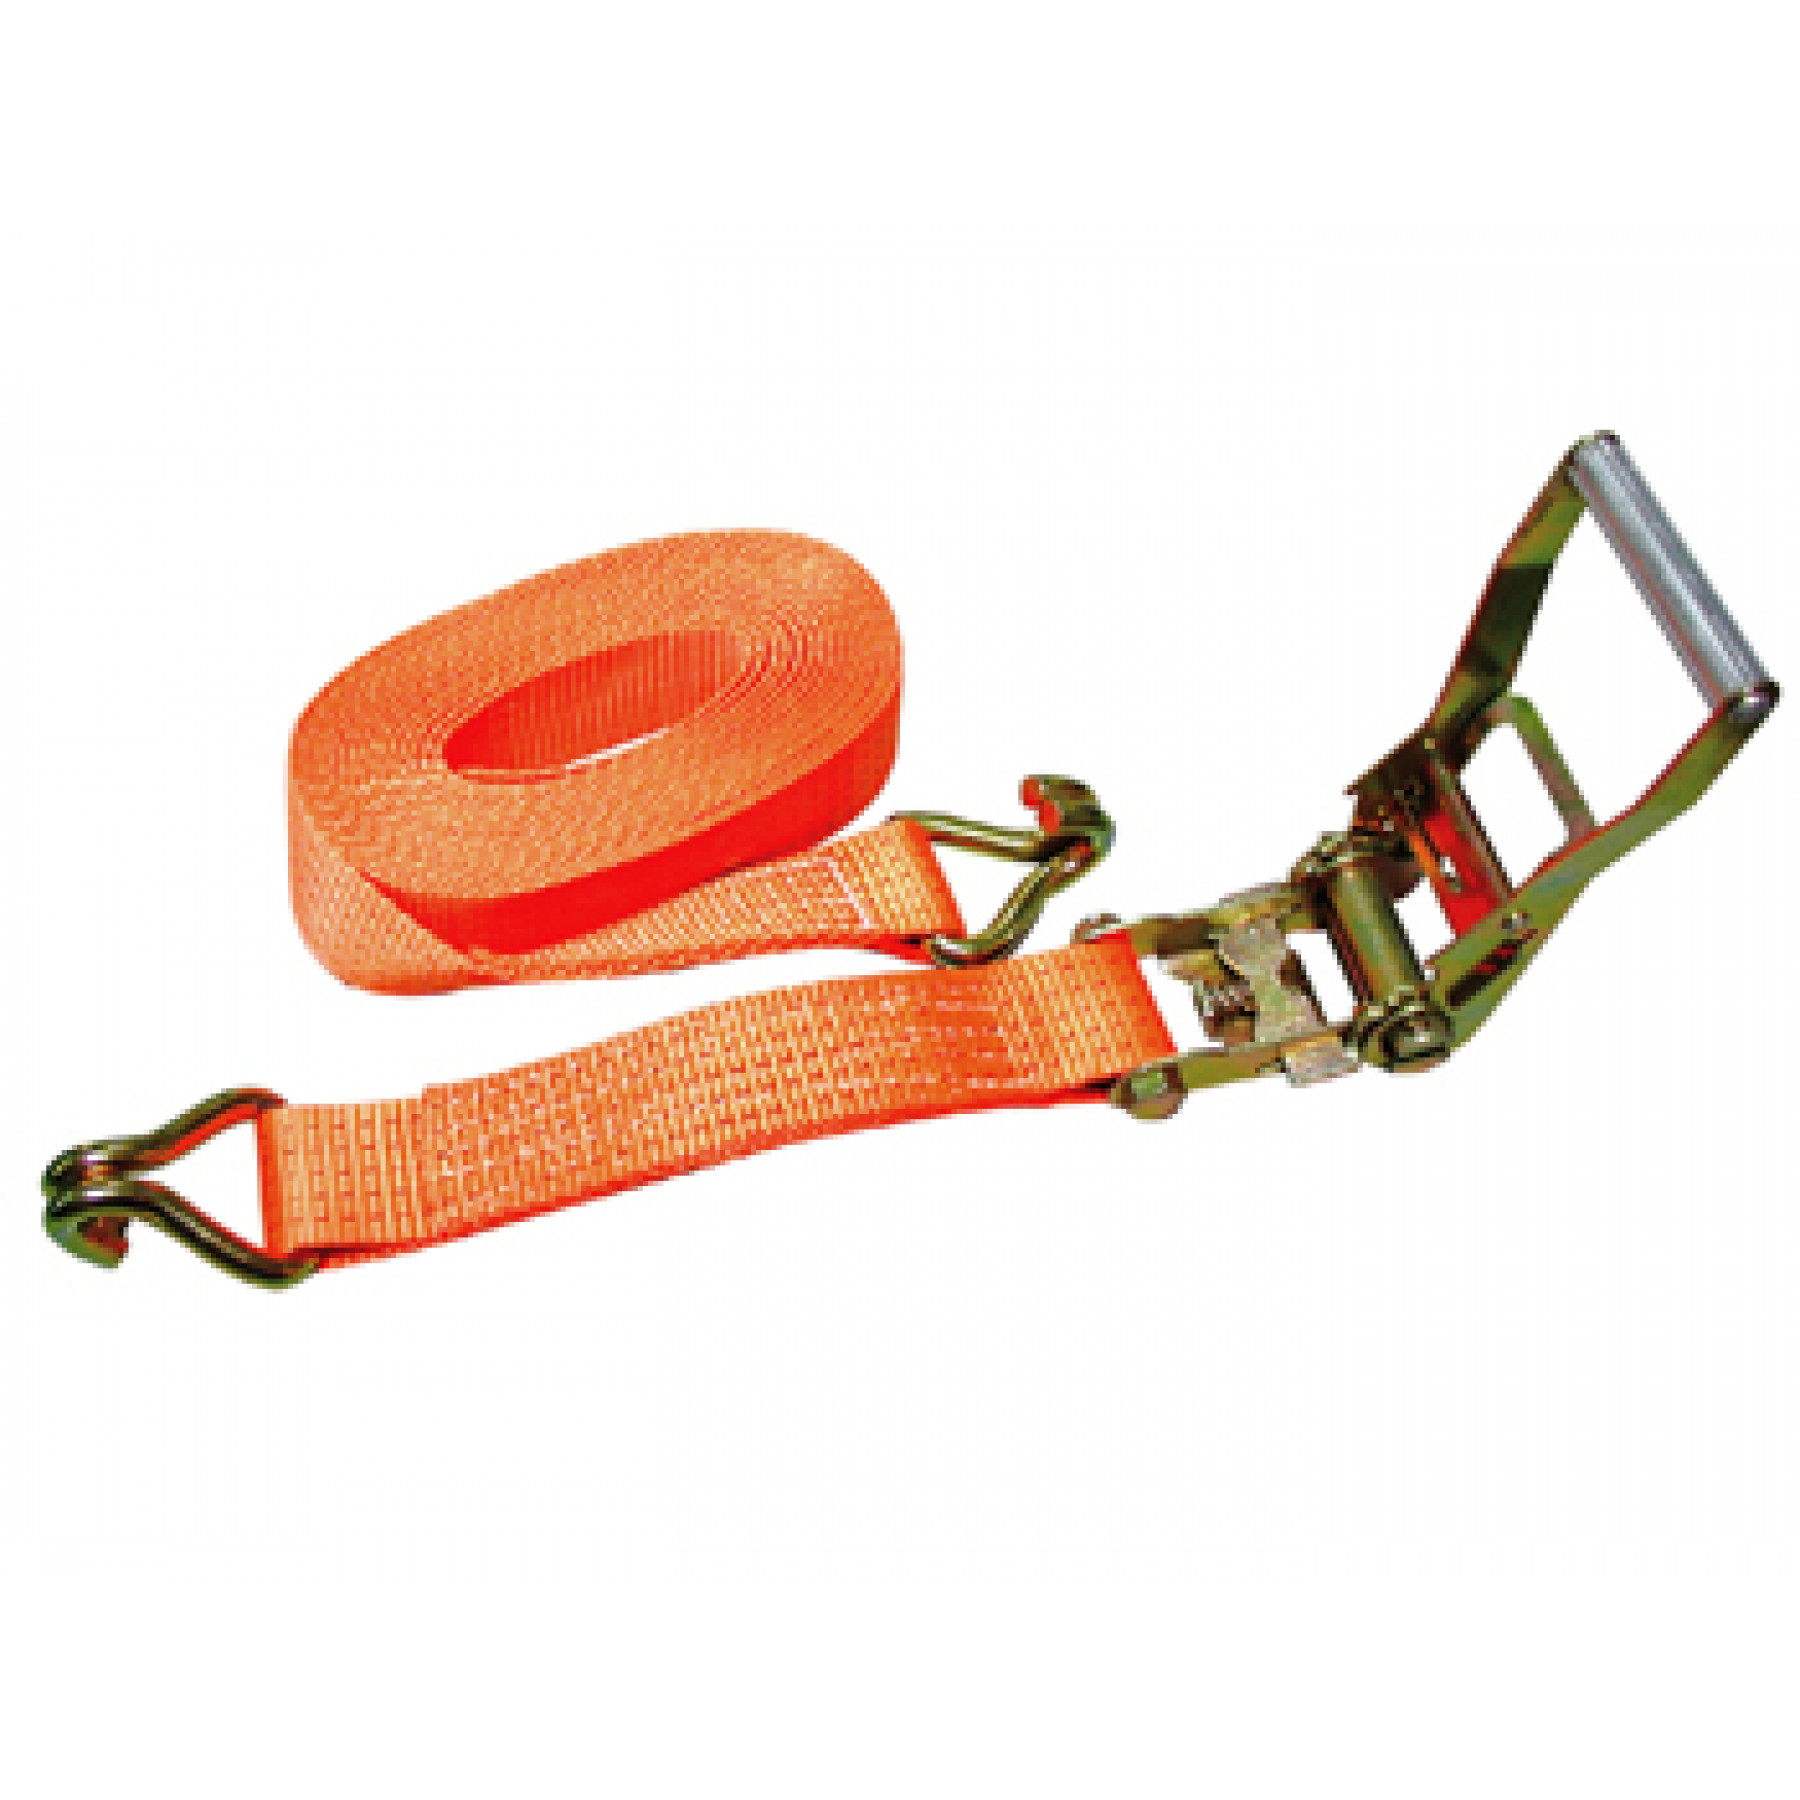 Sjorband 4 ton-12m ratel/haak oranje